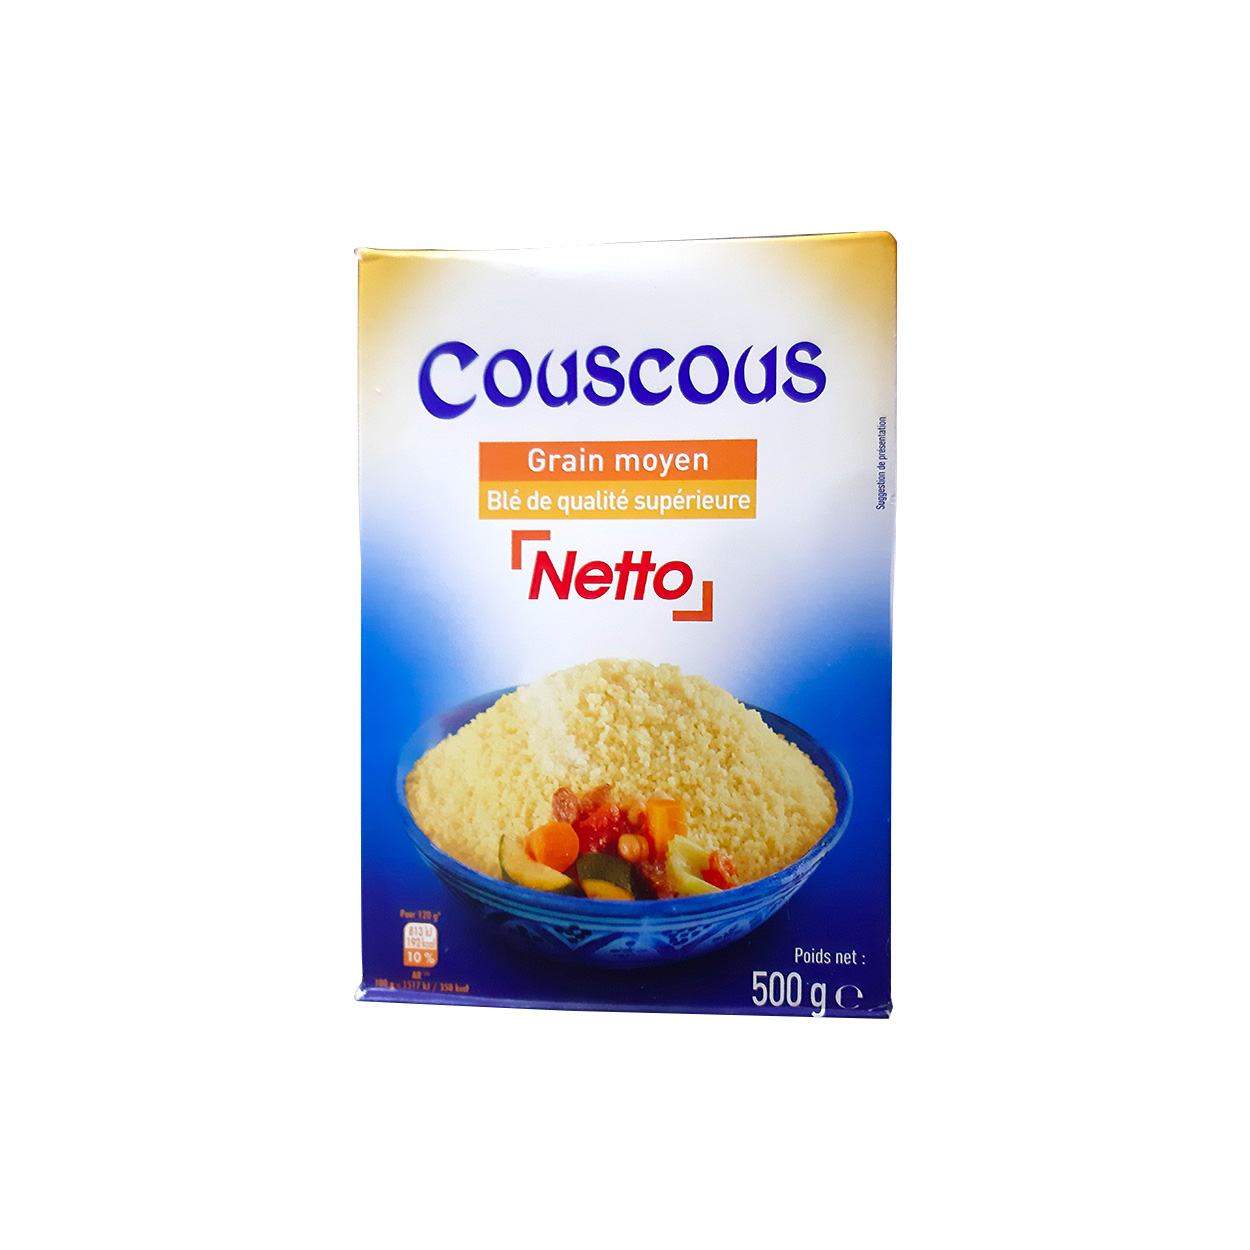 couscous-grain-moyen Easy-market cameroun diaspora